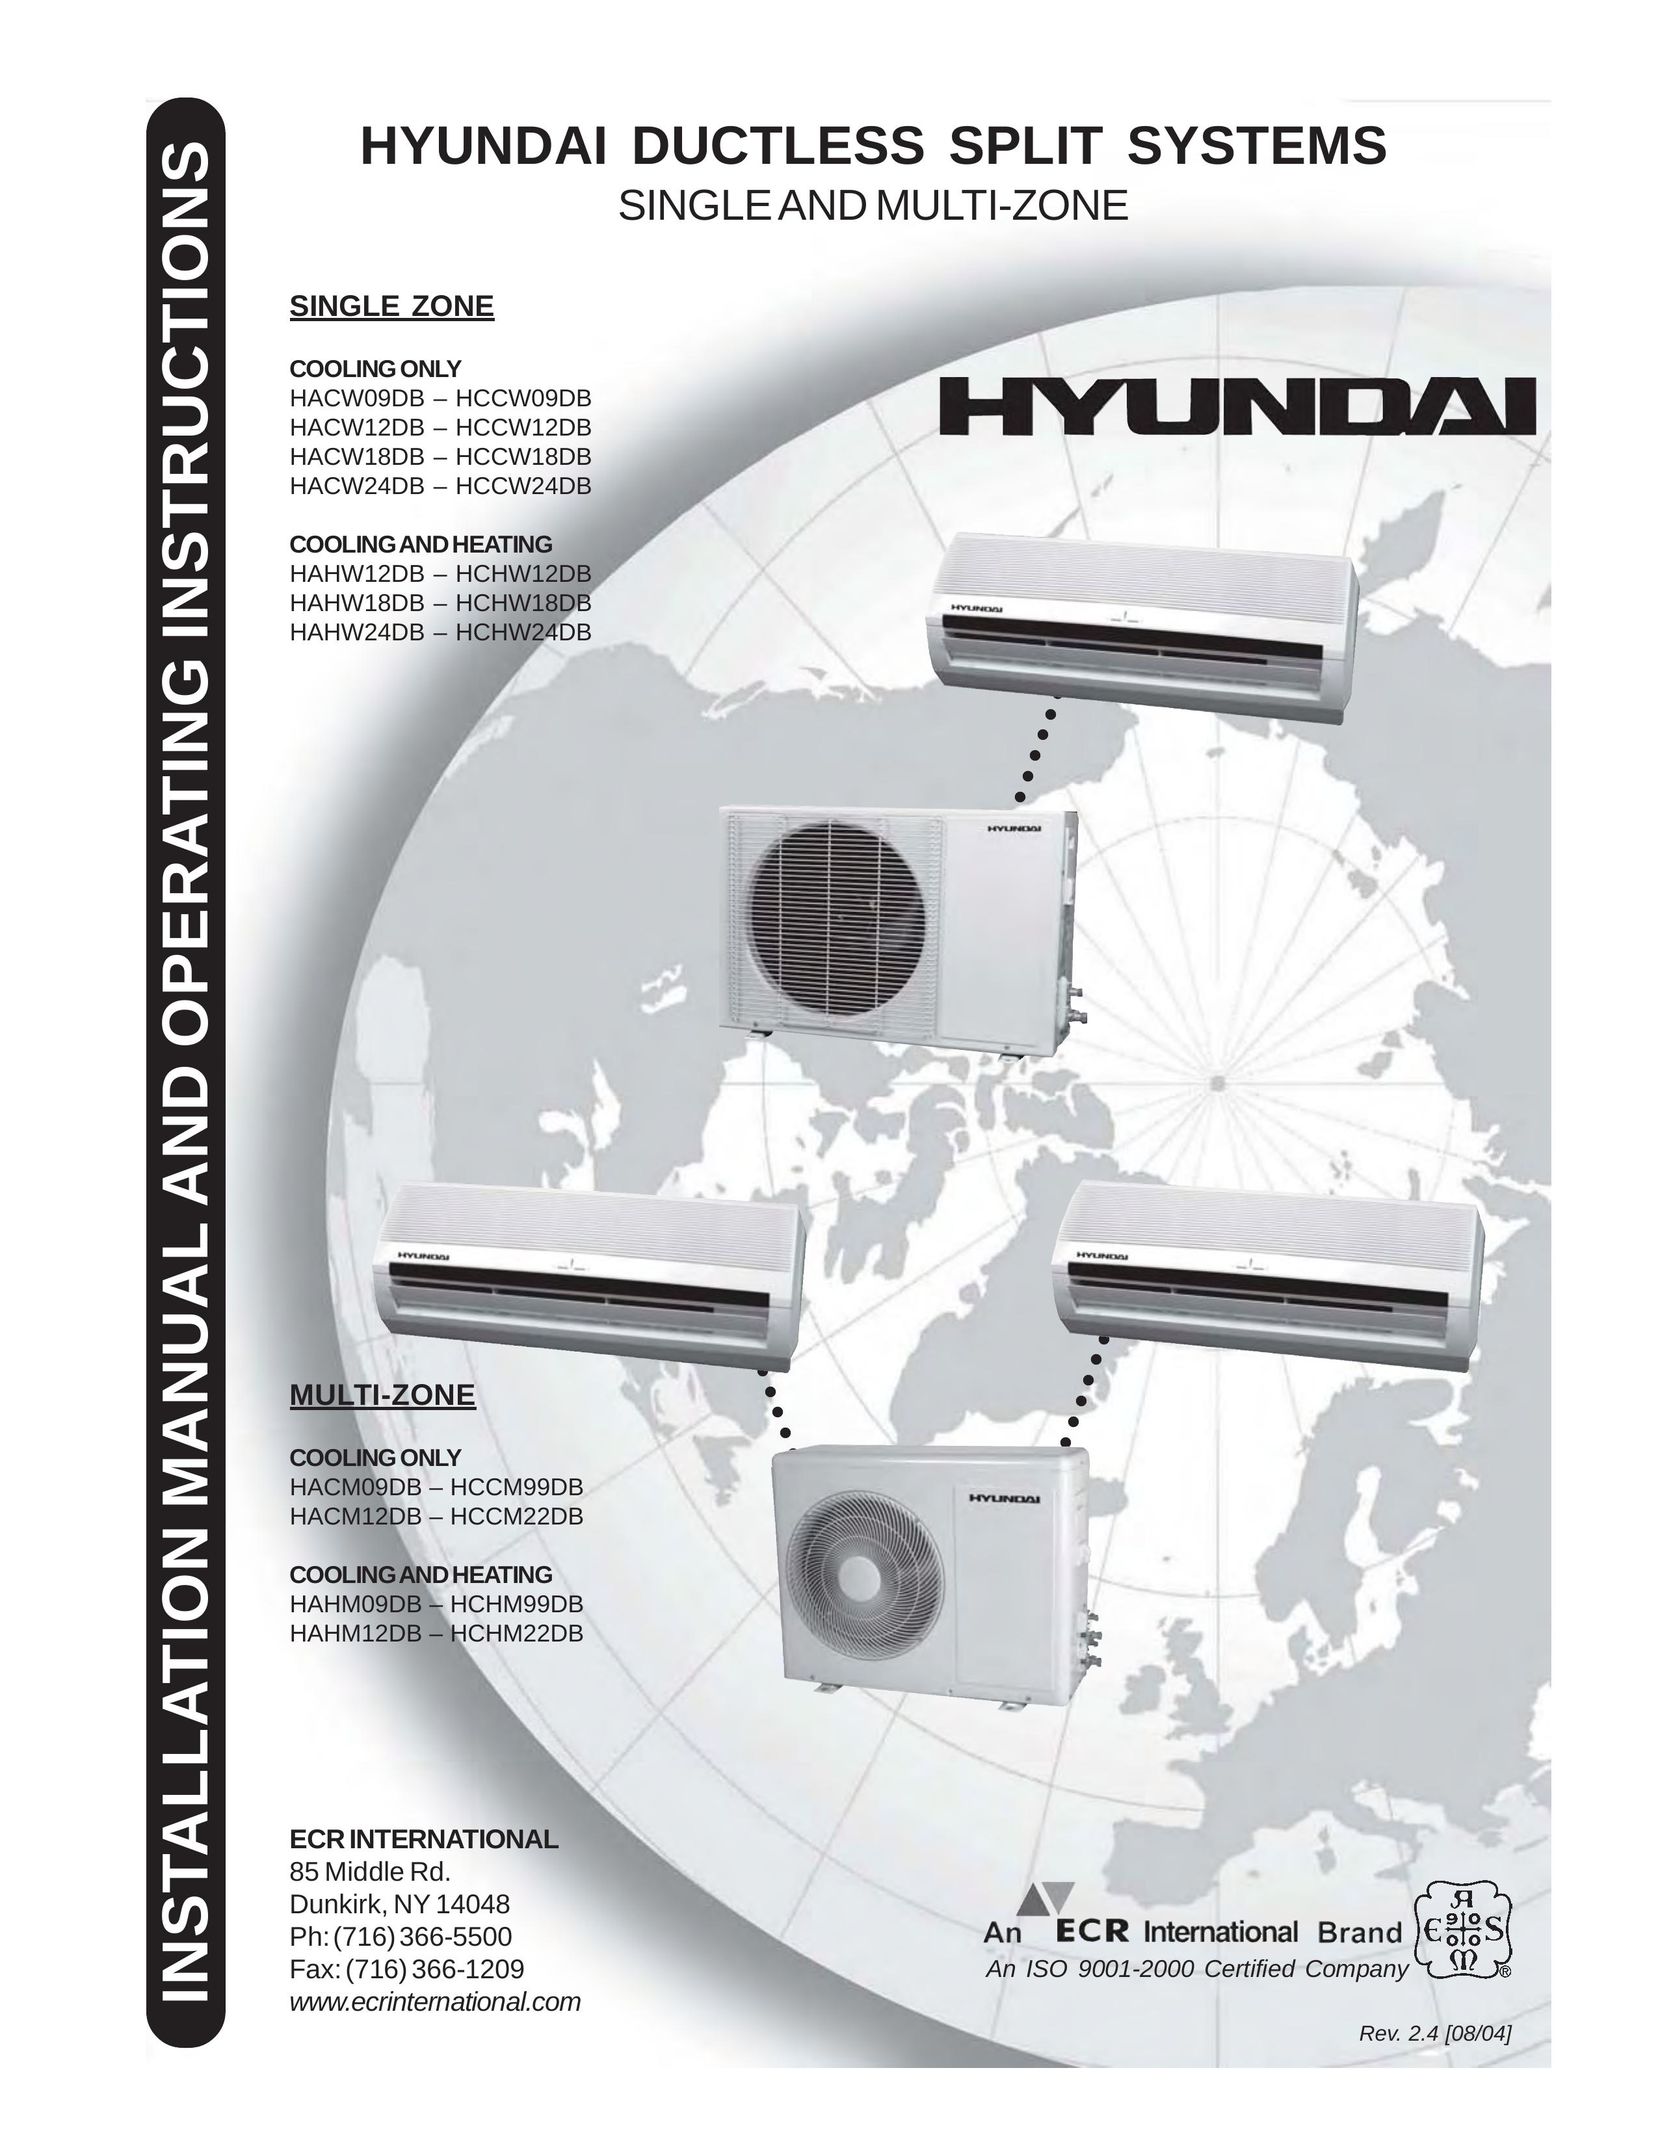 Hyundai HACW12DB - HCCW12DB Air Conditioner User Manual